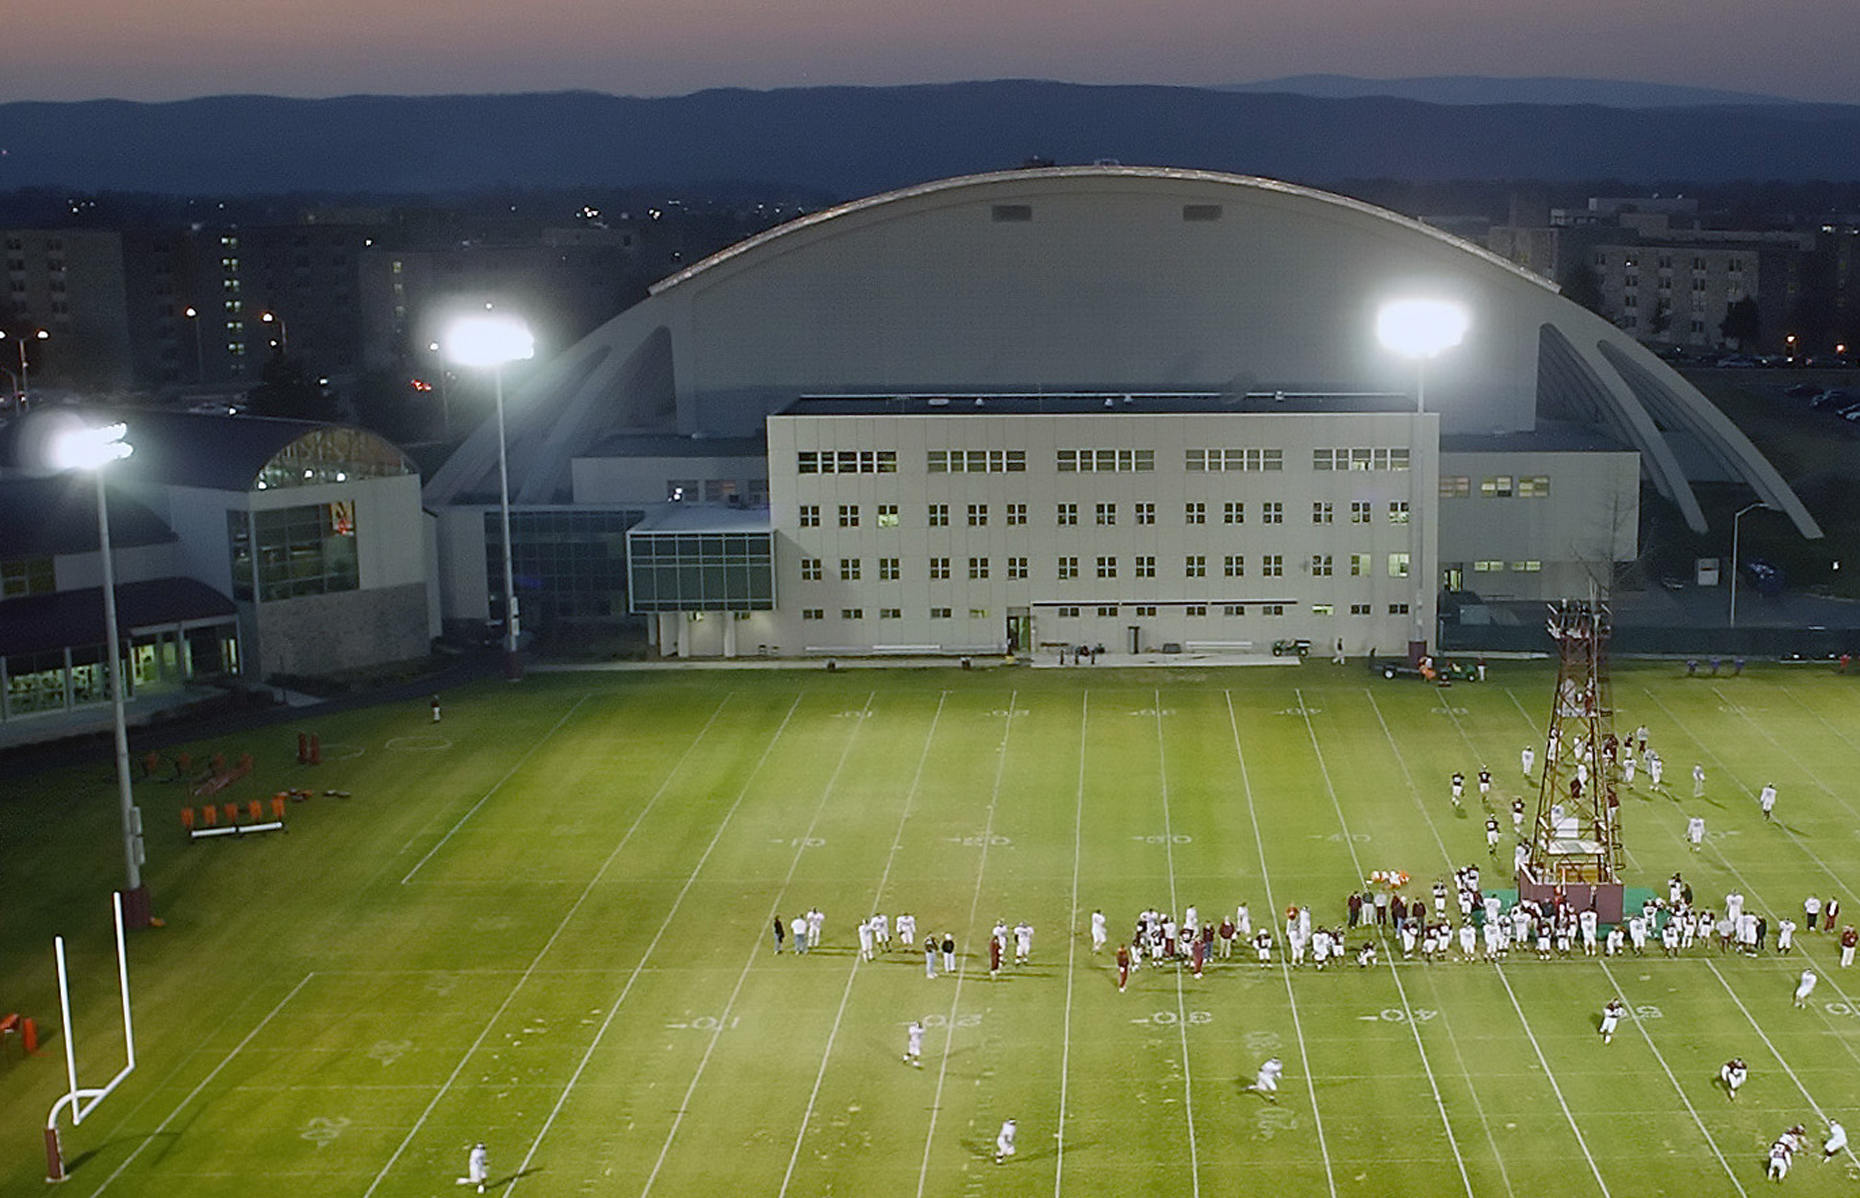 Photograph of the Steve Johnson Practice Fields at Virginia Tech